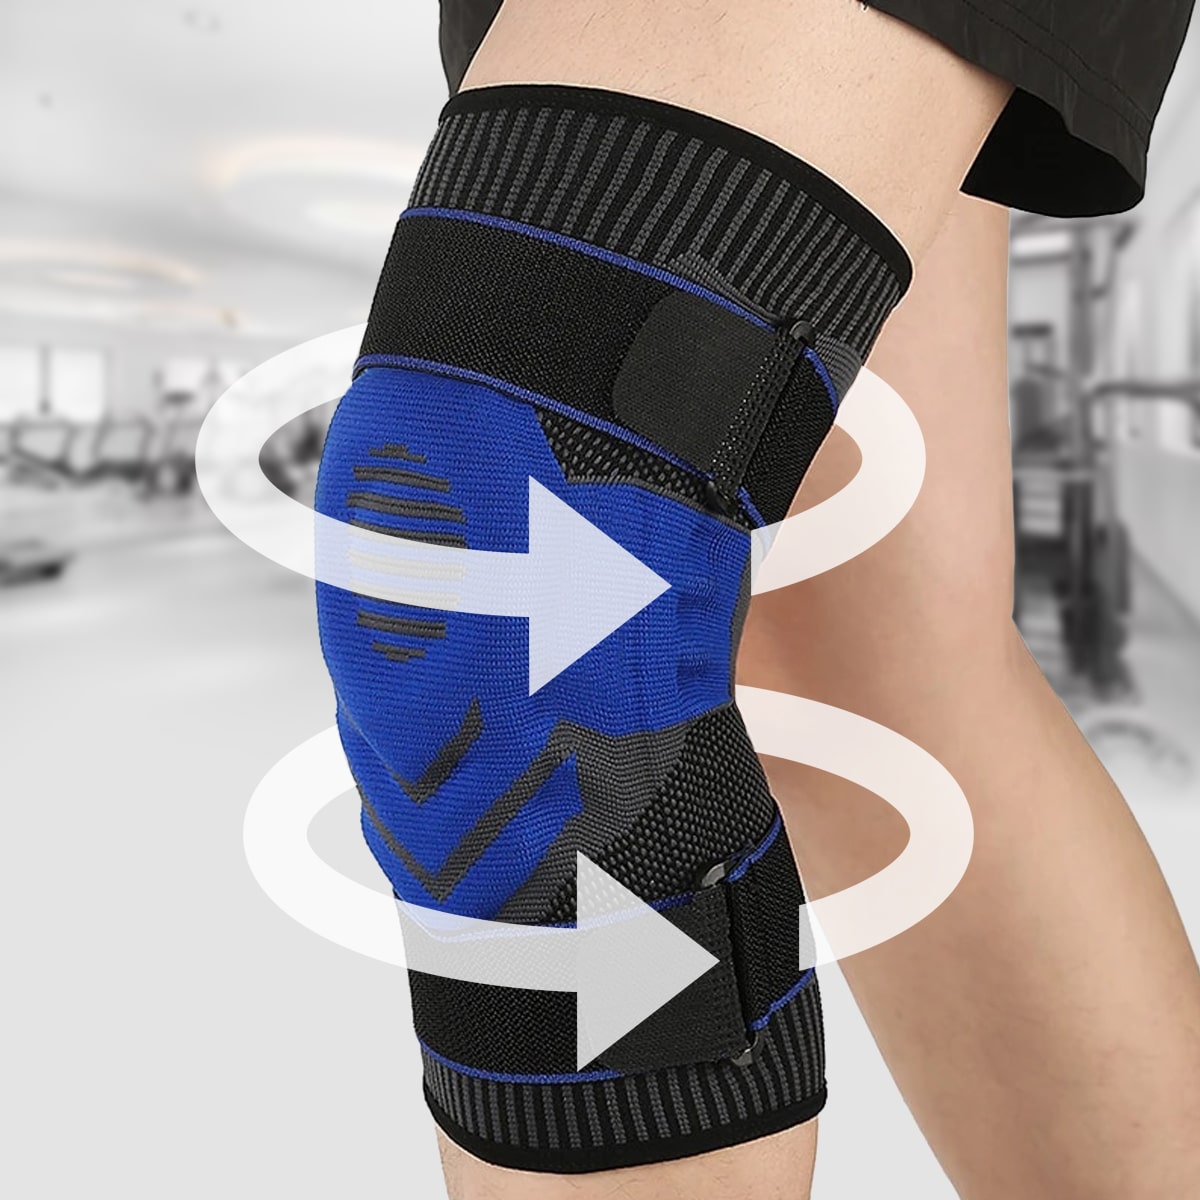 TrainSafe Profi 3D compression bandage